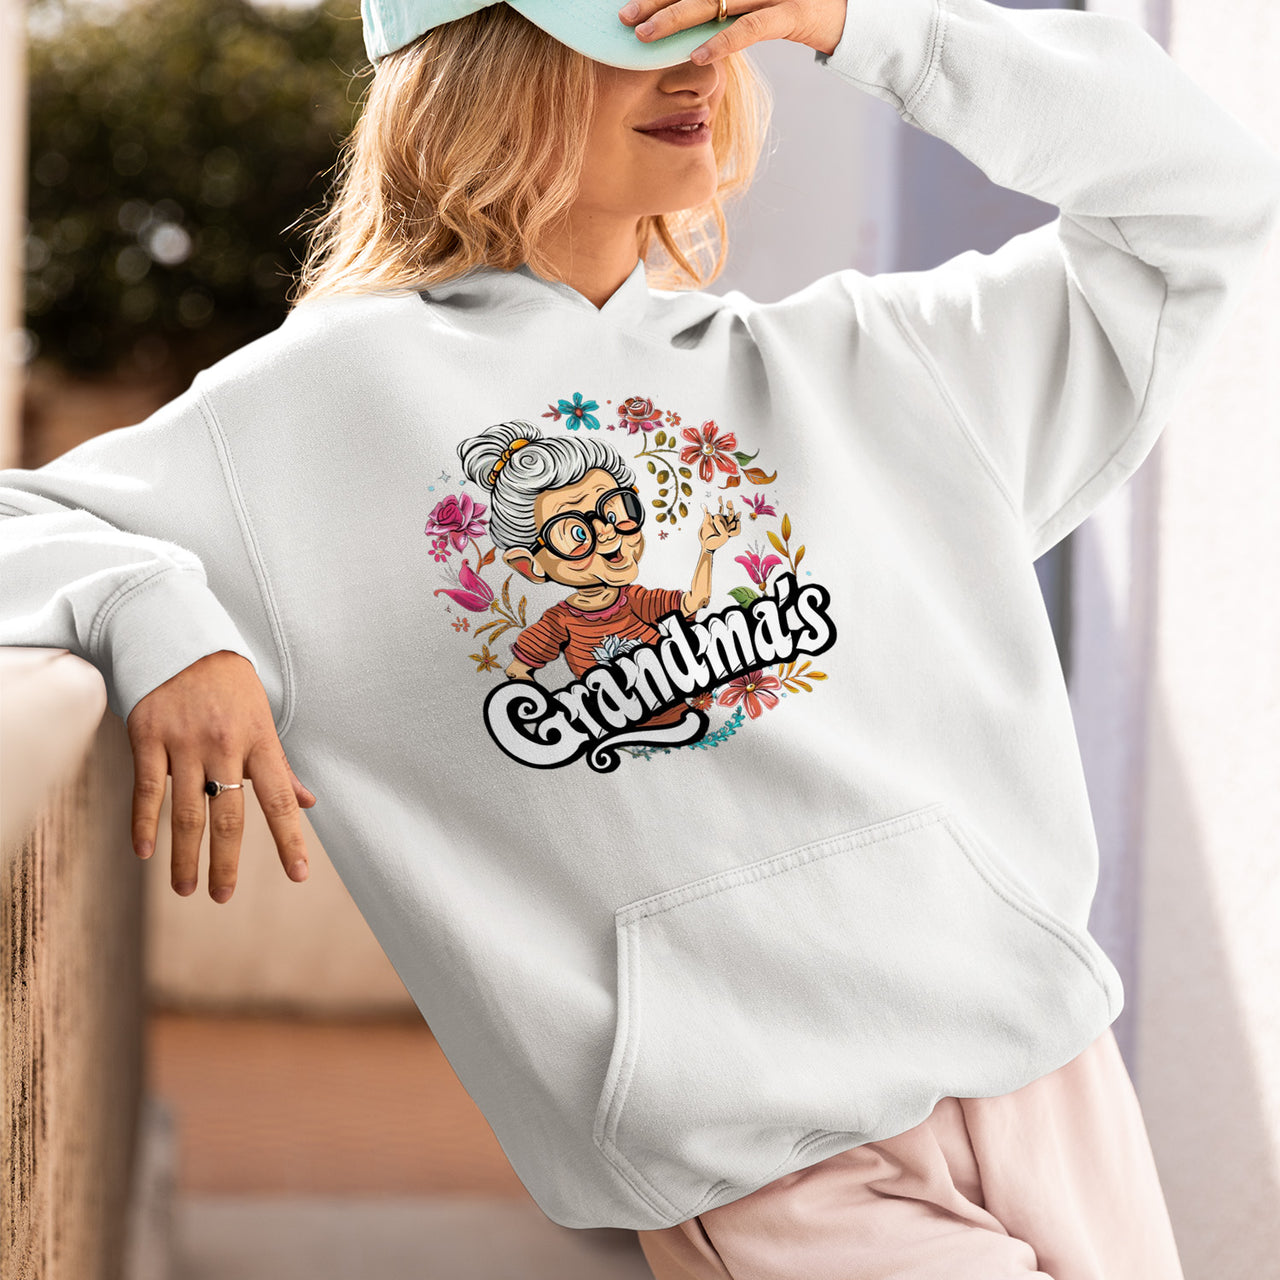 Cute Chibi Grandma T-Shirt, Grandma's T-Shirt, Celebrate Mom, Nana Shirt, Grandma Hoodie, Grandma Shirt, Mother's Day Gift For Grandma, Happy Mother's Day